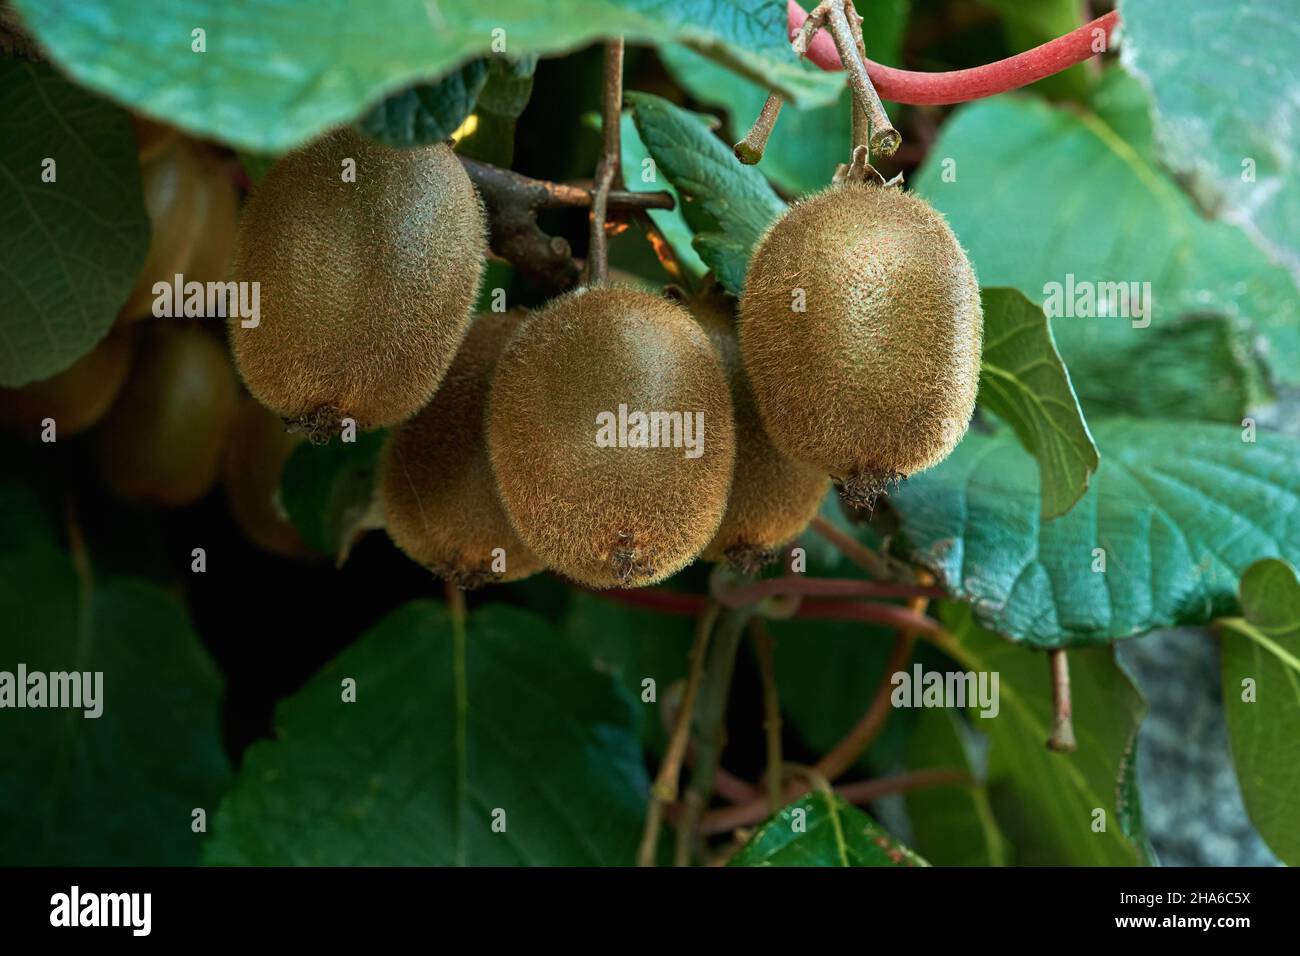 Kiwifruits growing in Actinidia deliciosa woody vine Stock Photo